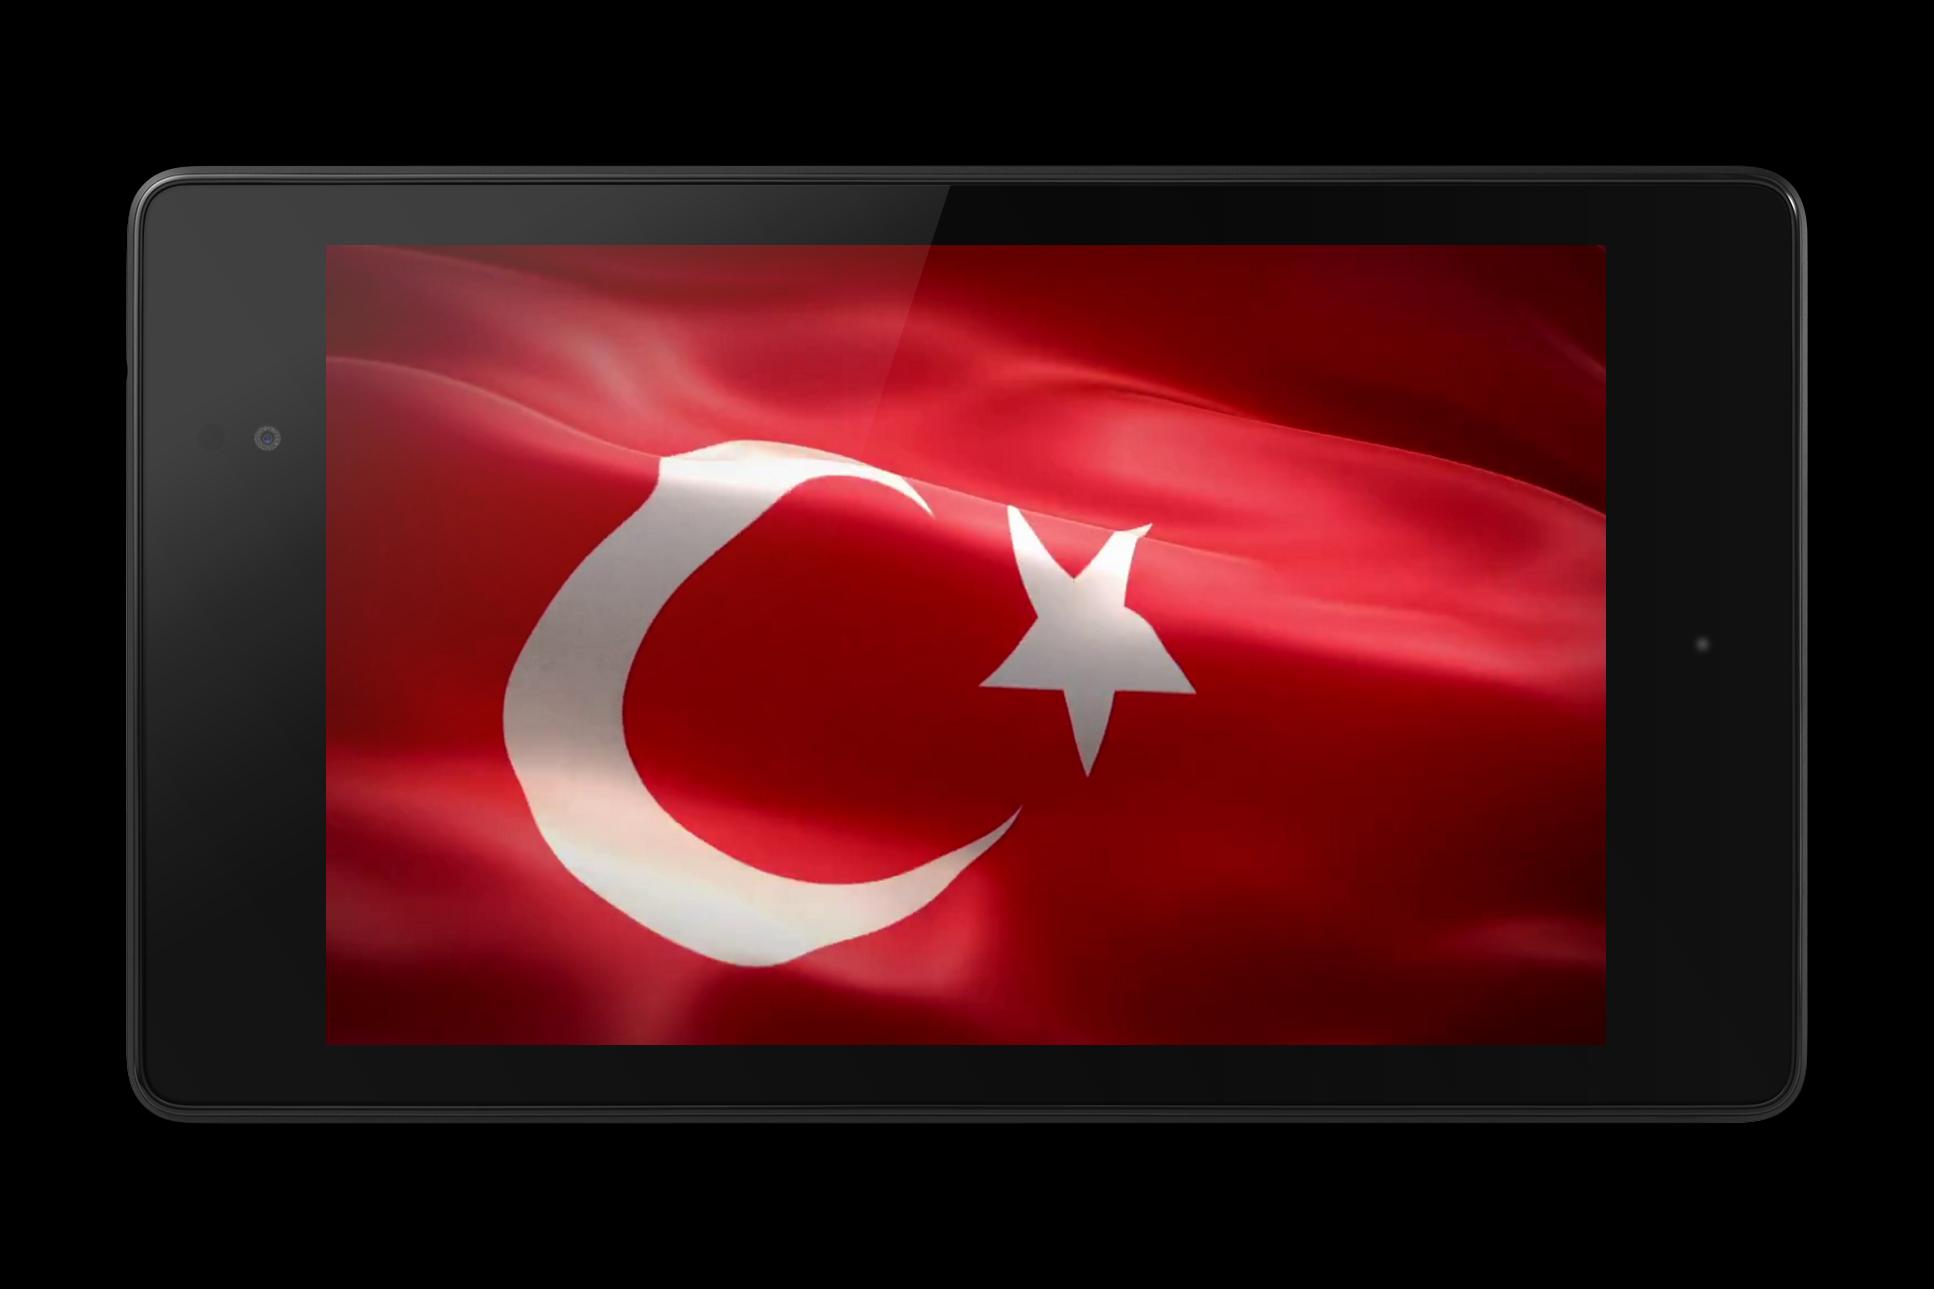 Turkey video. Флаг Турции видео. Турция видео для презентации. Турецкие видео браузер. Турция видео.